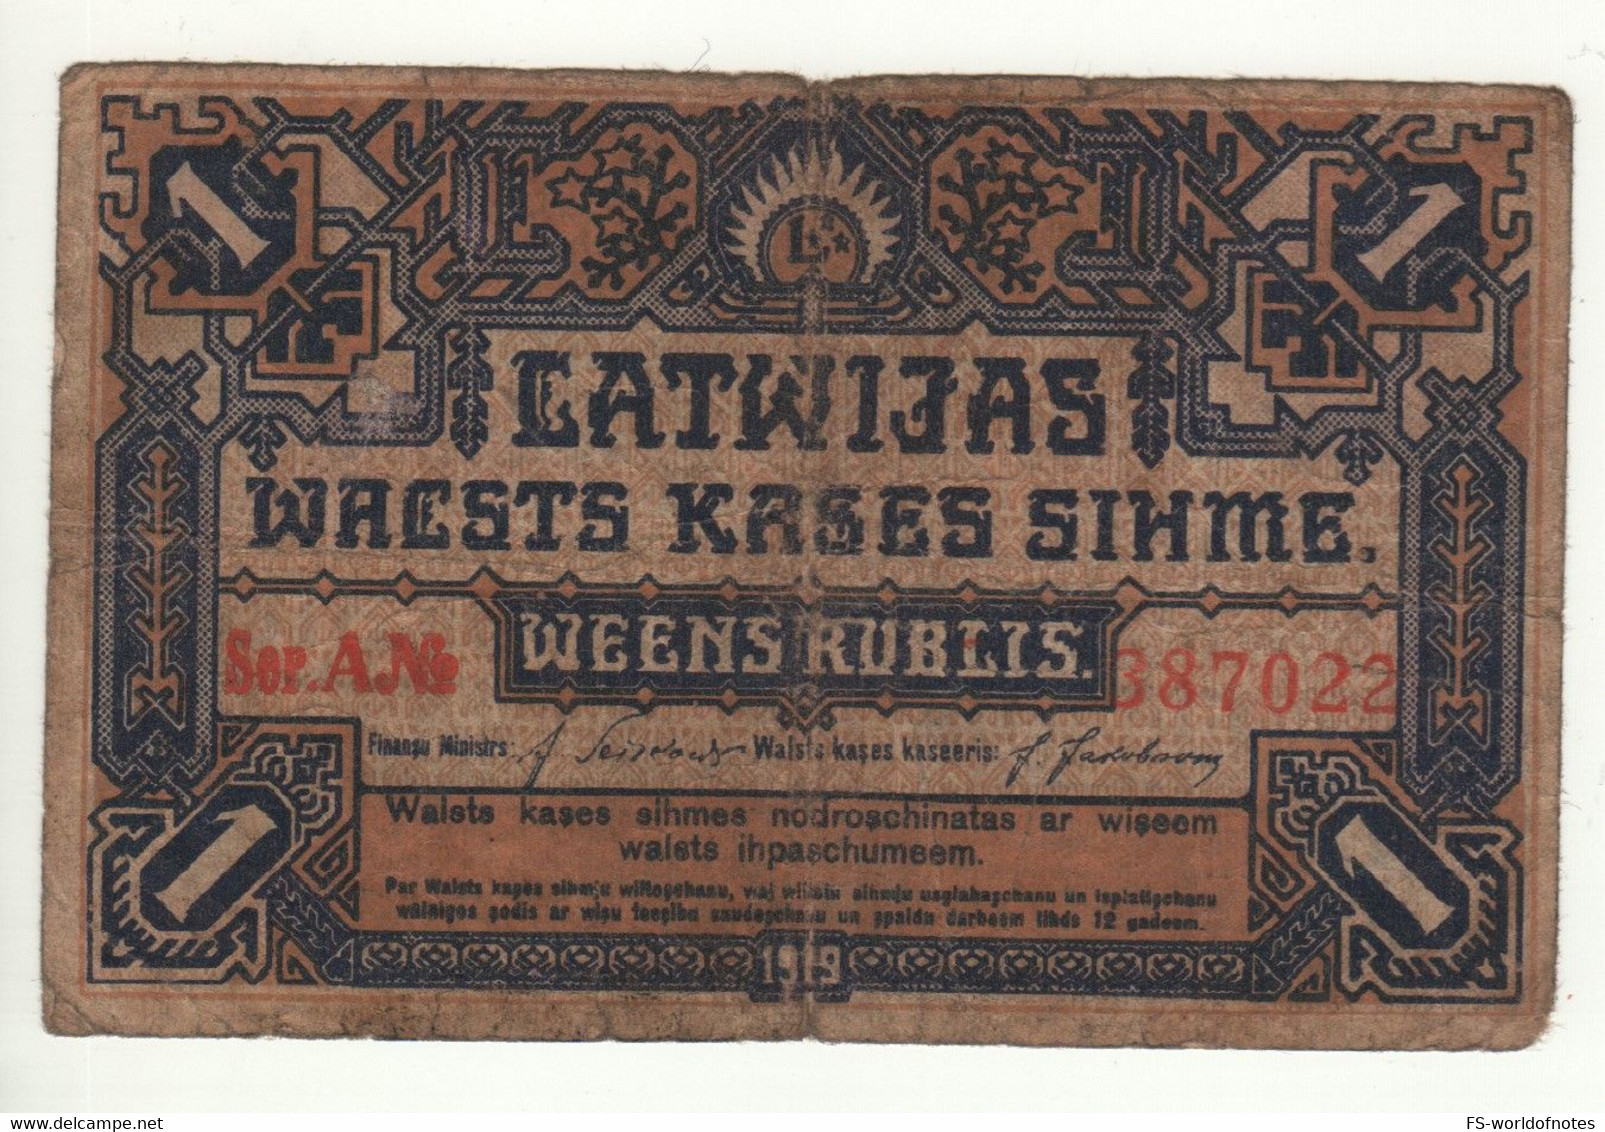 LATVIA  1 Rublis    P1   1919 - Latvia